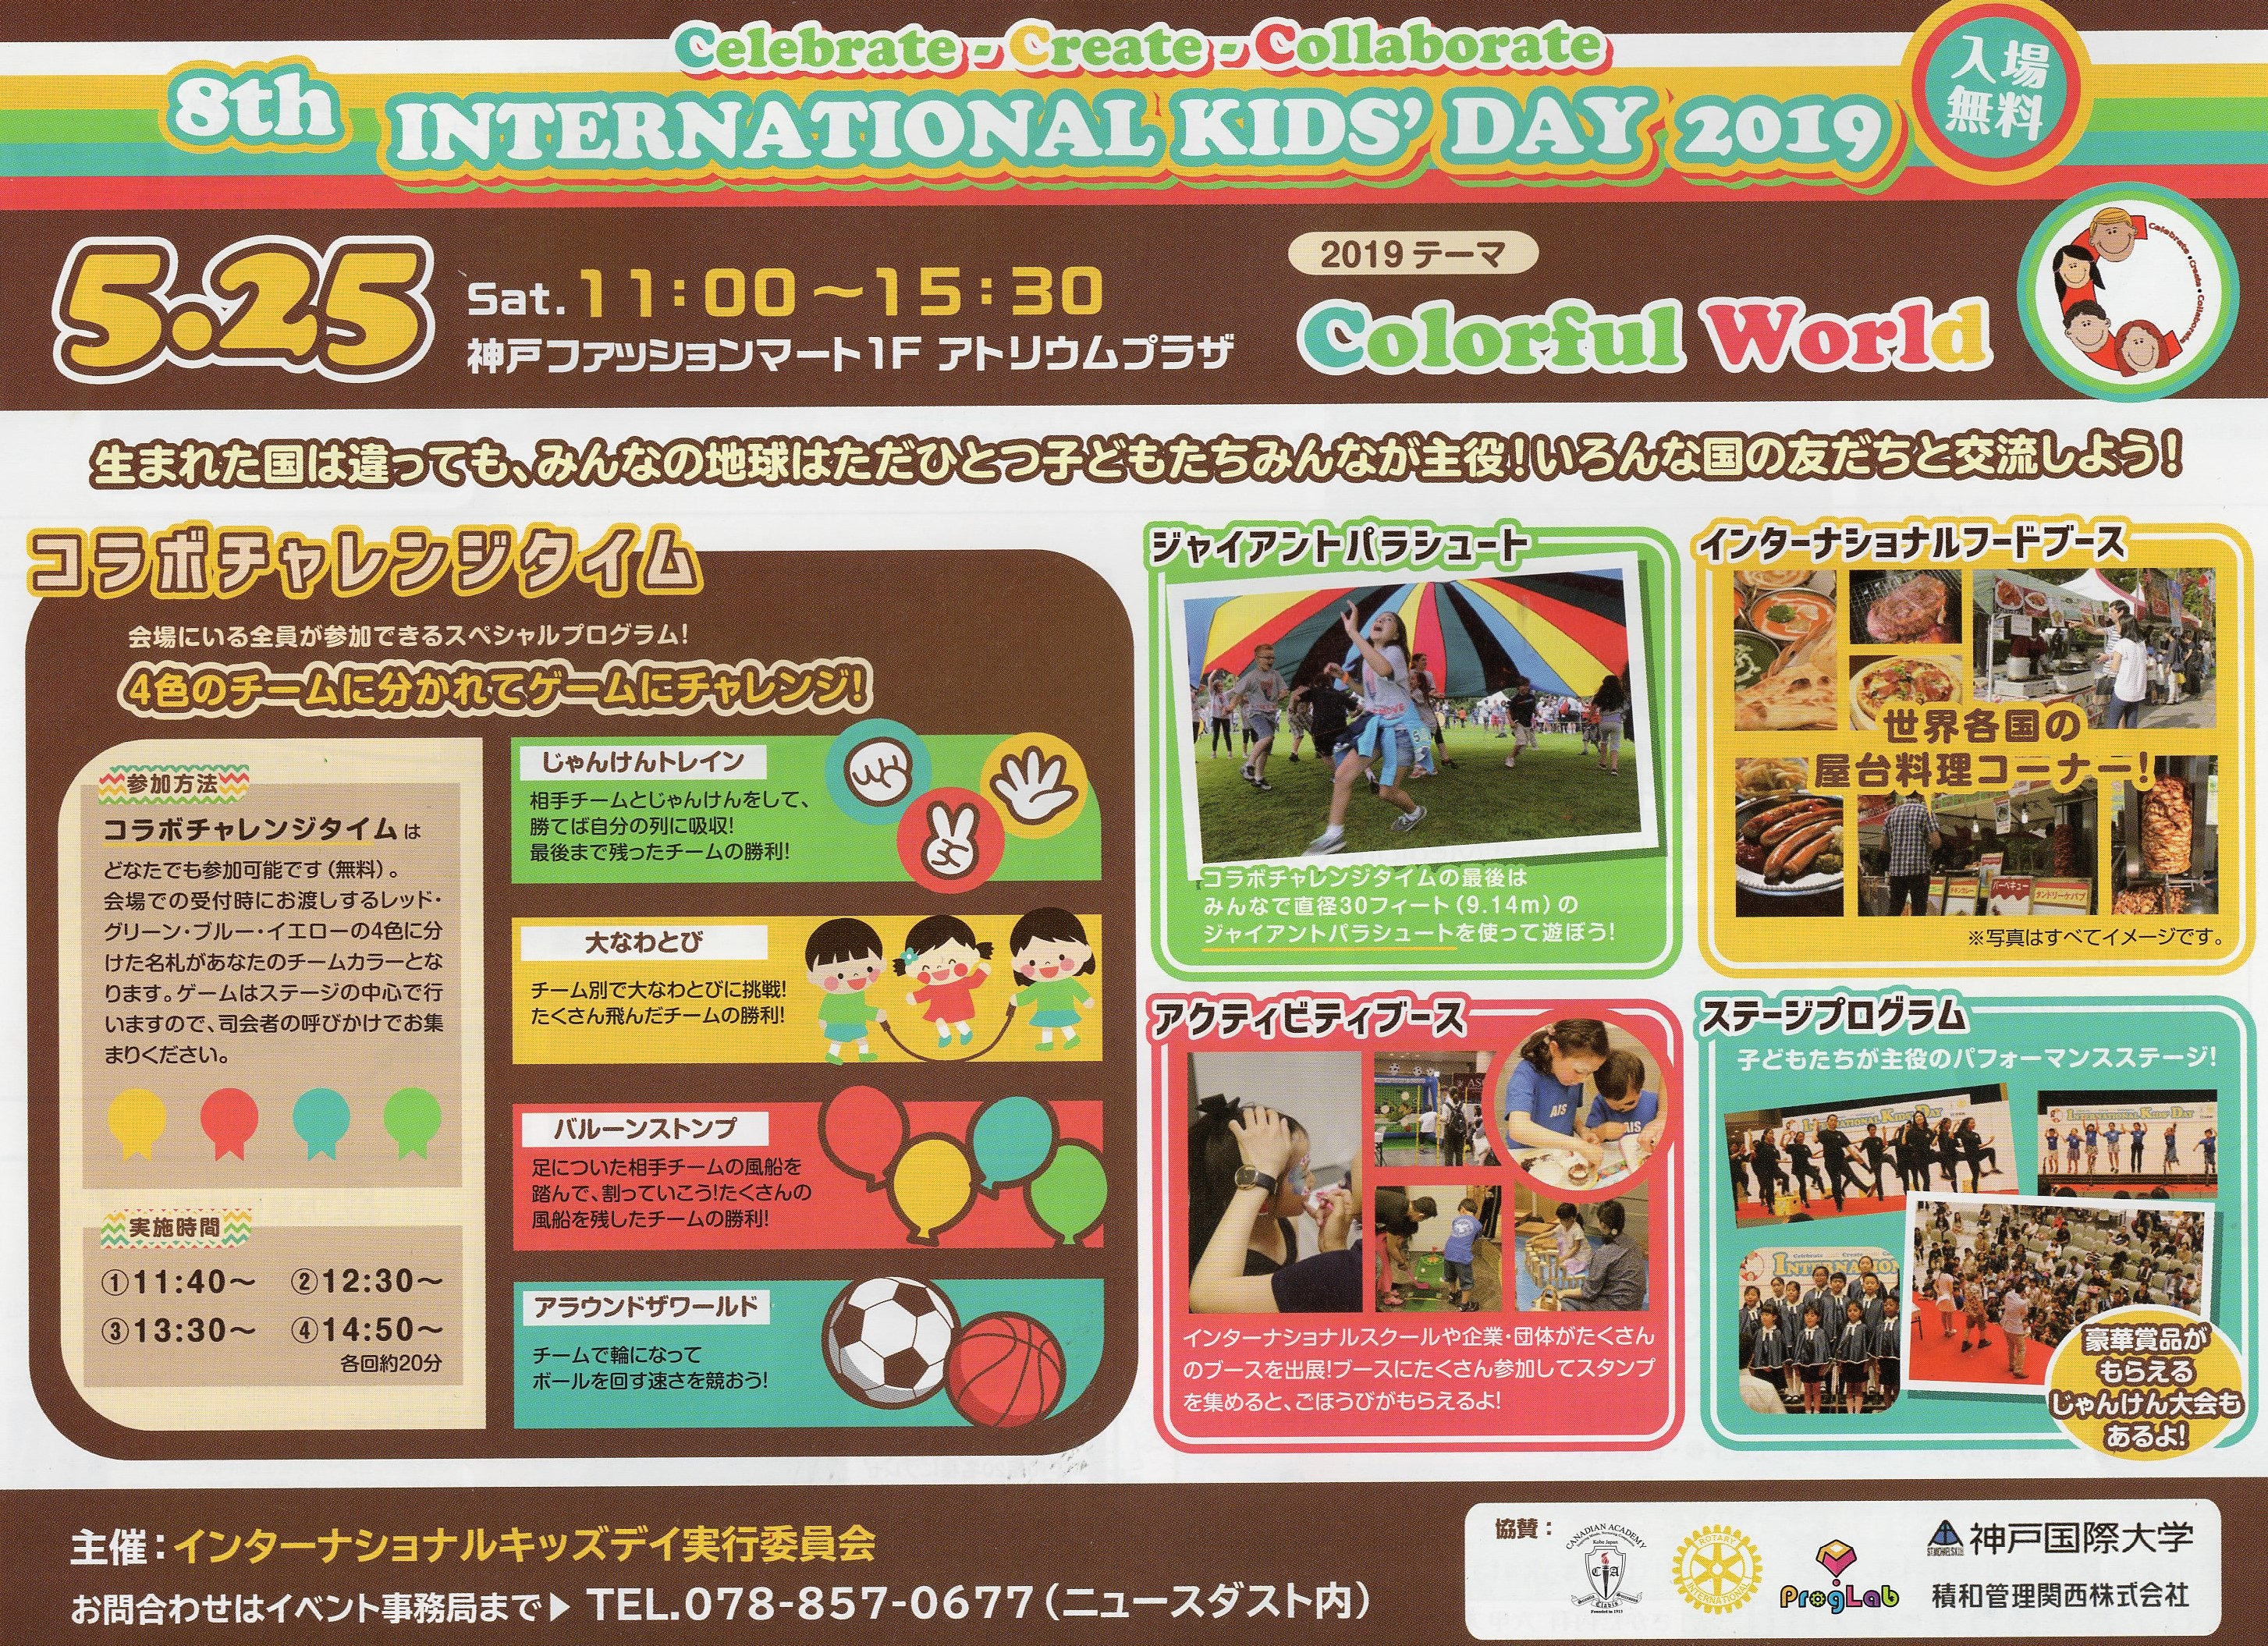 8th INTERNATIONAL KIDS' DAY 2019